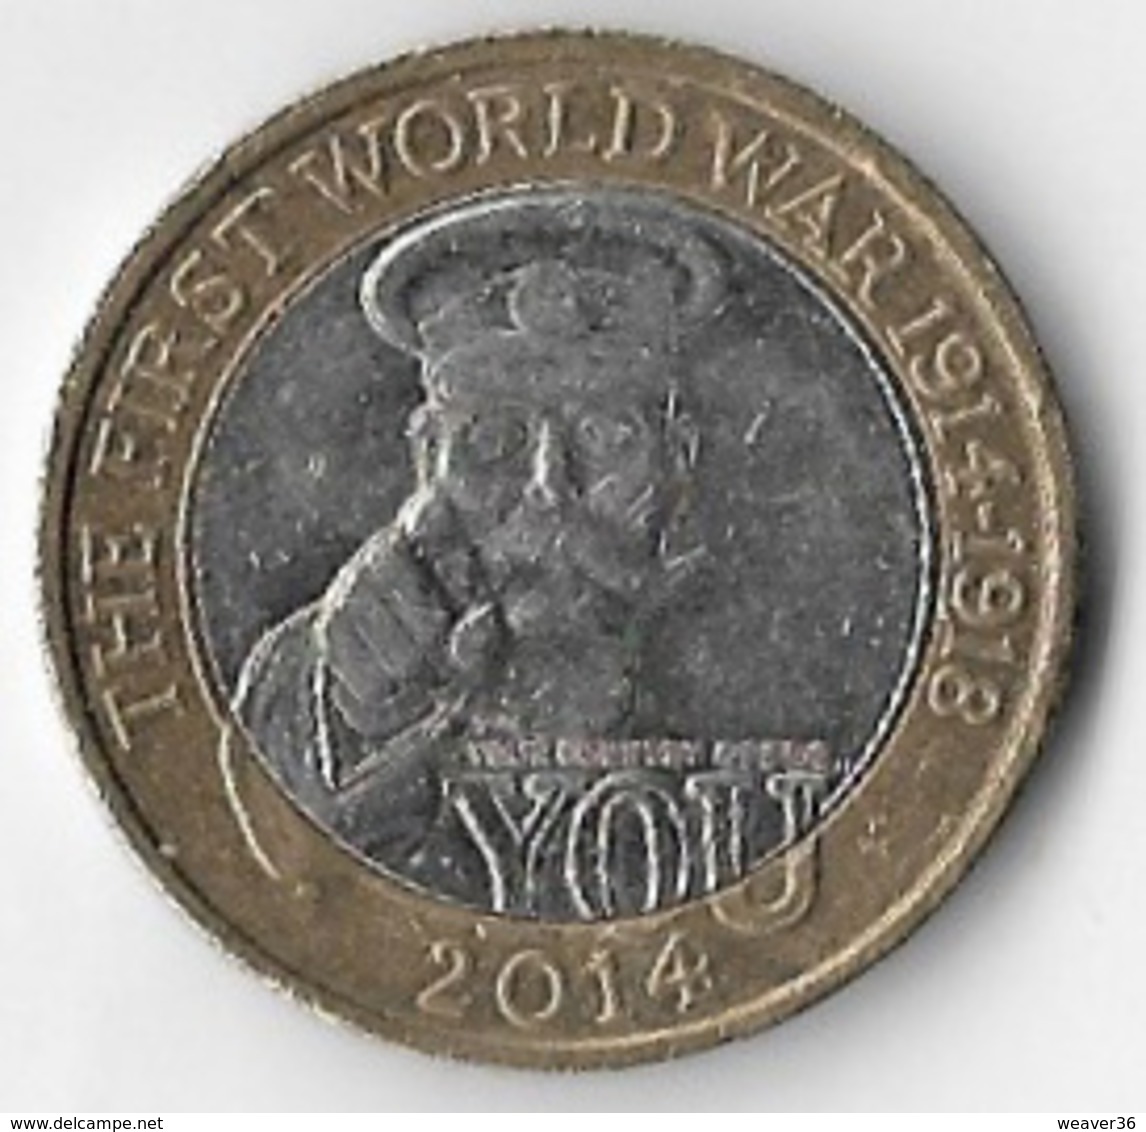 United Kingdom 2014 £2 World War One (A) [C221/1D] - 2 Pounds